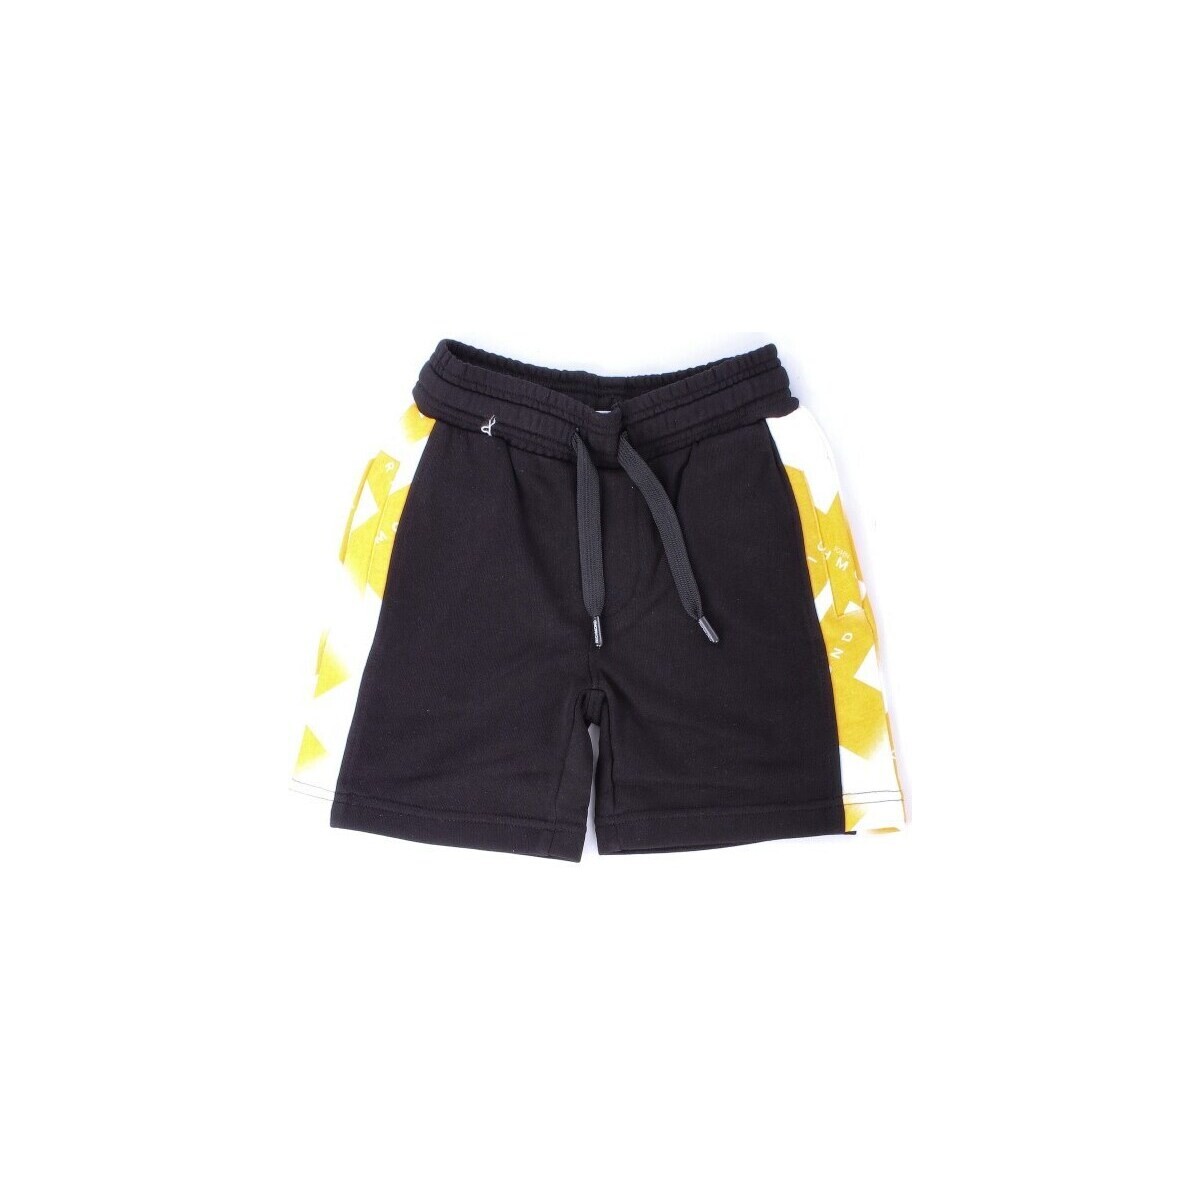 textil Niños Shorts / Bermudas John Richmond RBP23047BE Negro